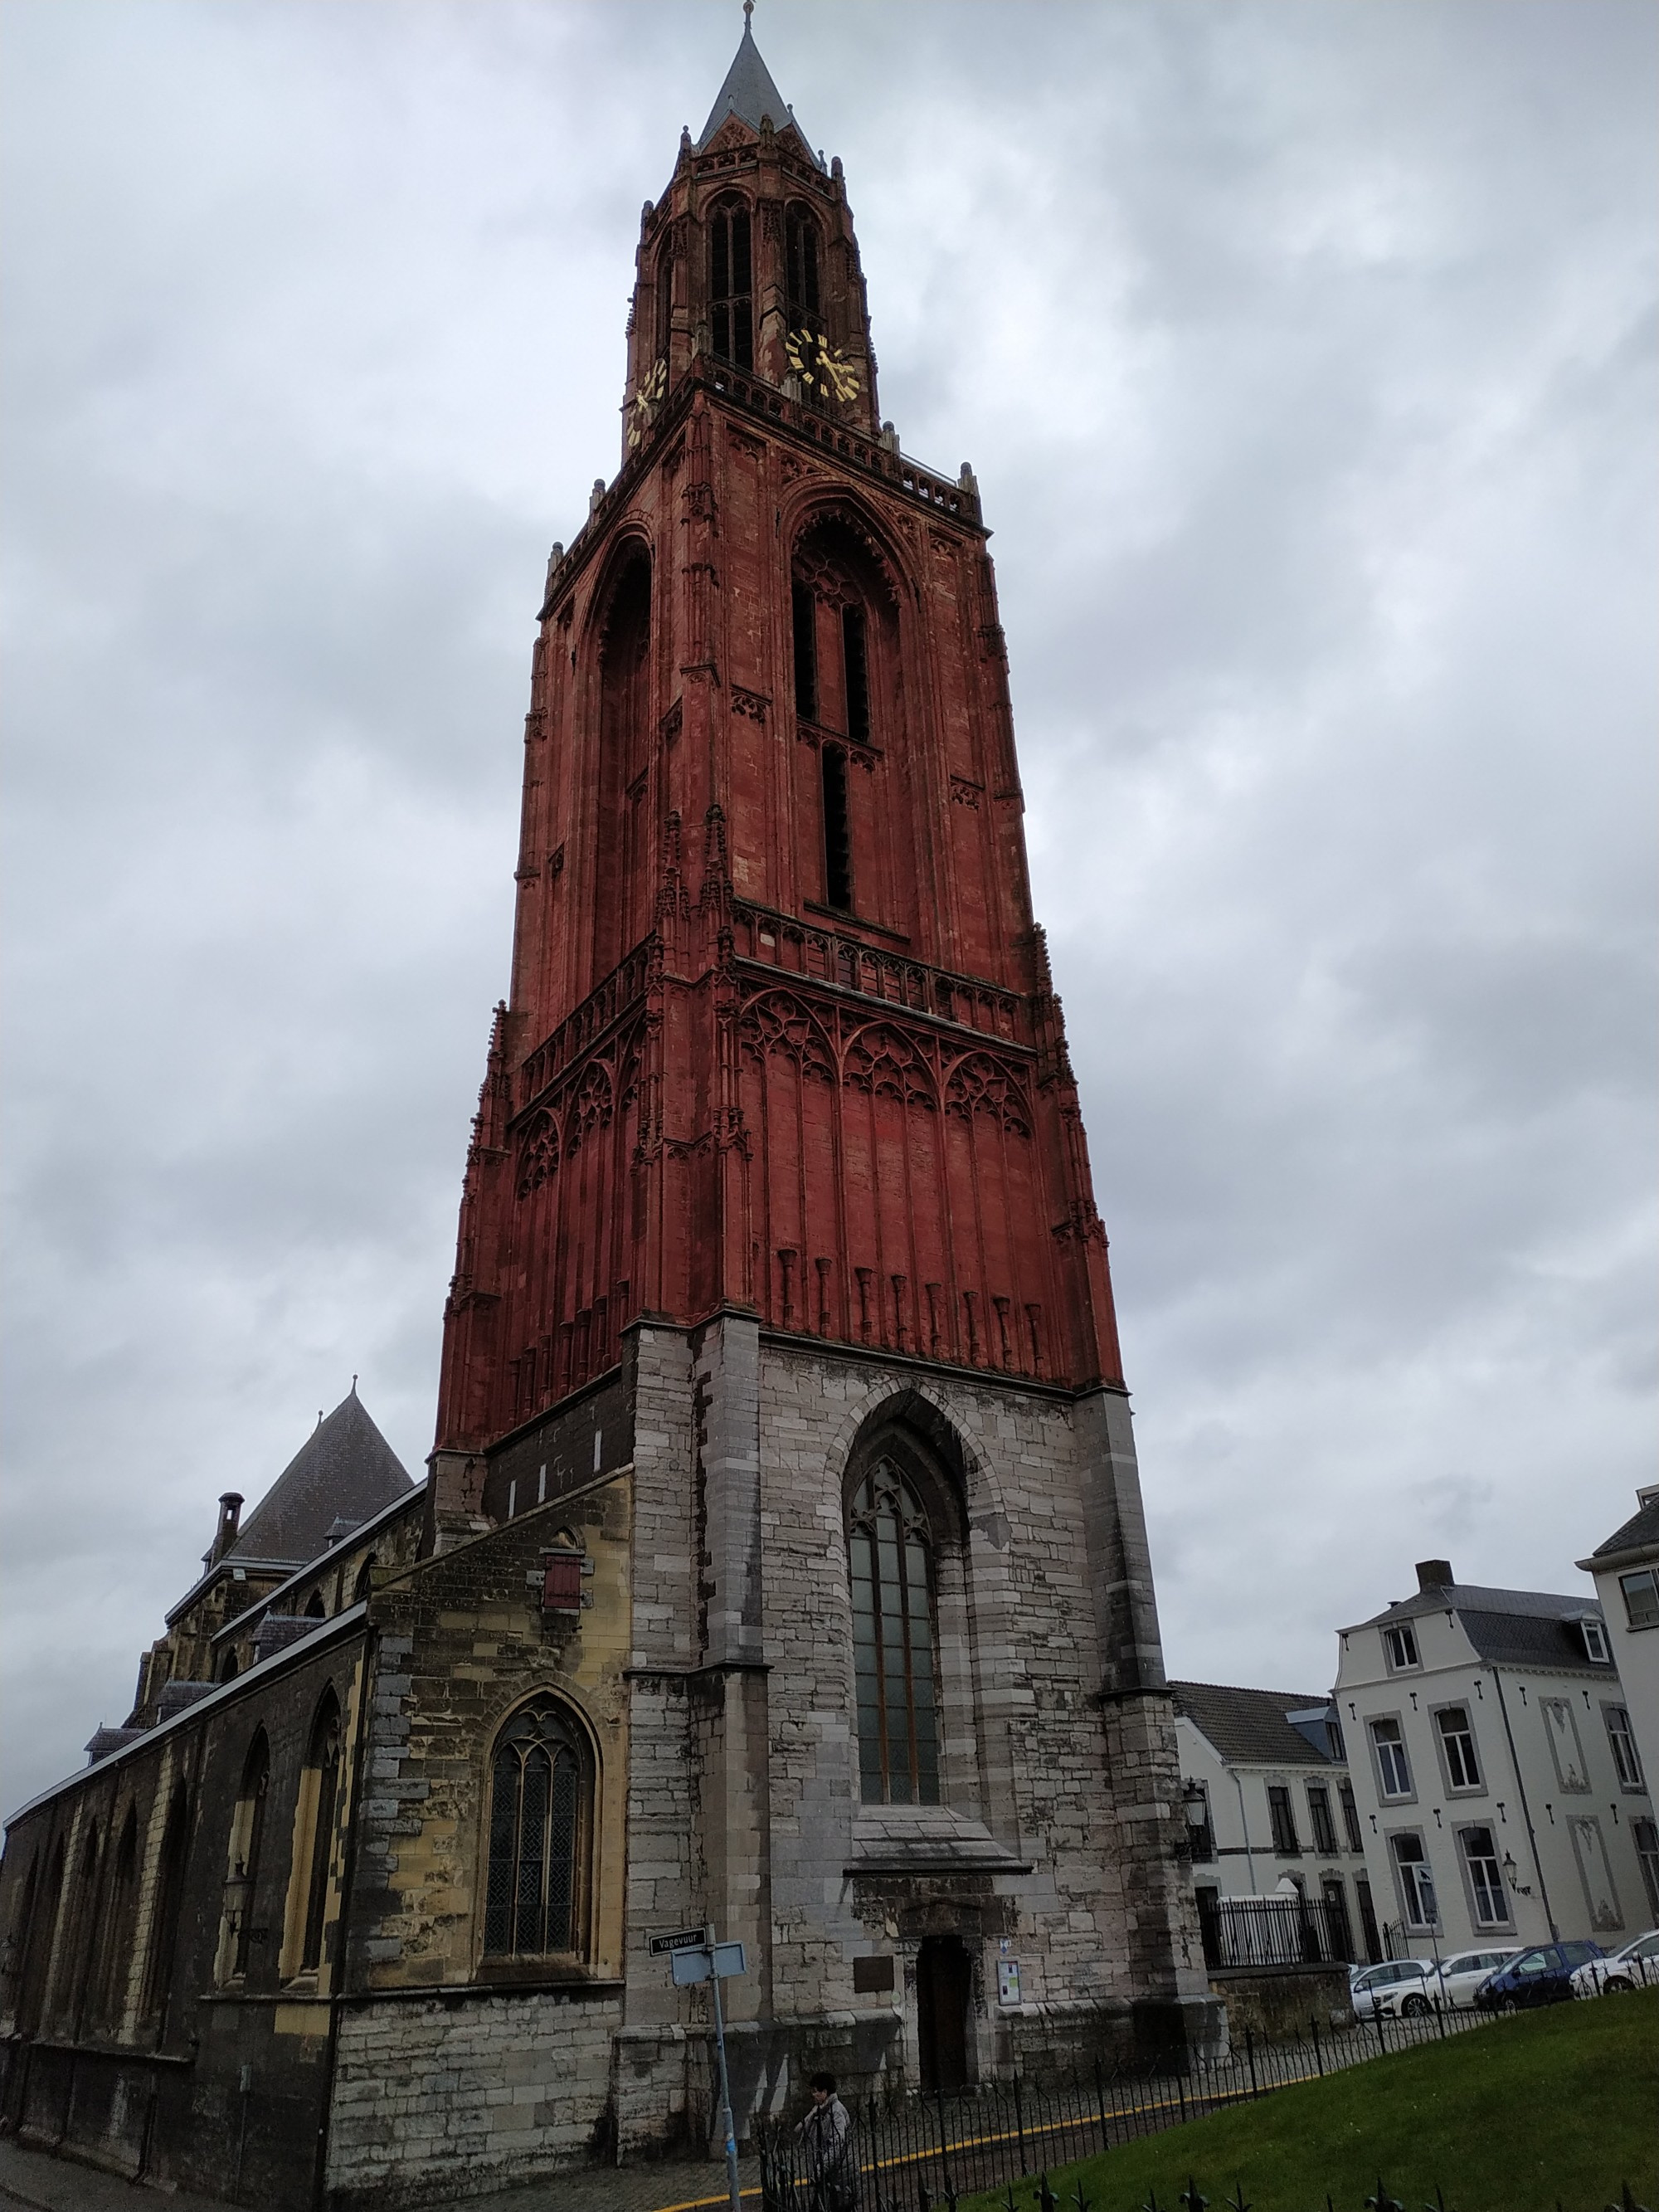 Маастрихт. Башня Церкви Святого Иоанна. (13.03.2019)